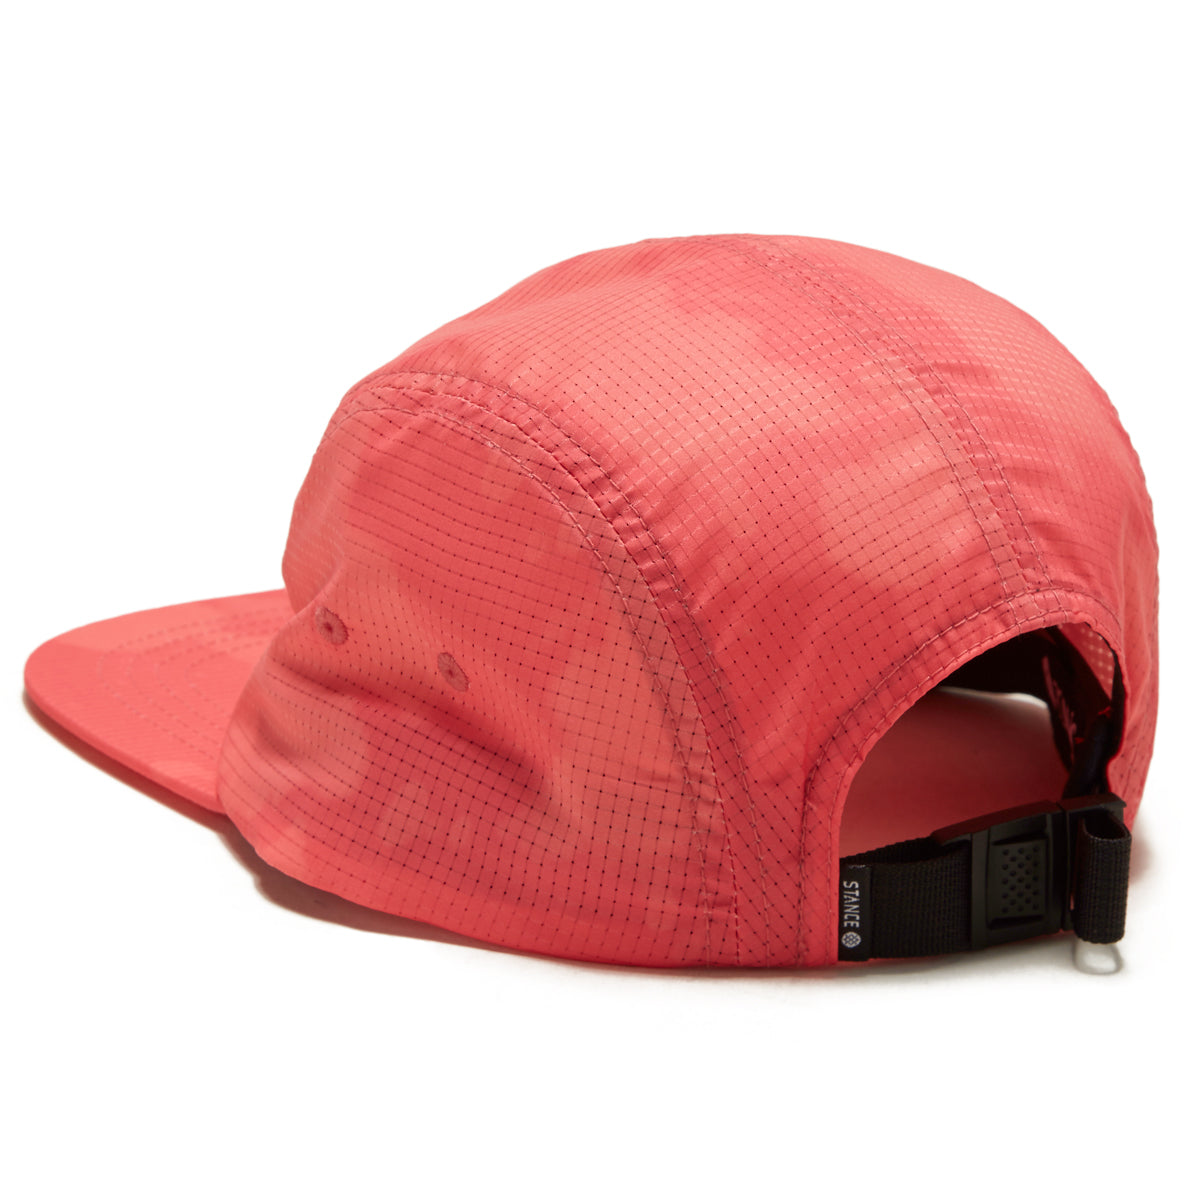 Stance Kinetic Adjustable Hat - Pinkwash image 2